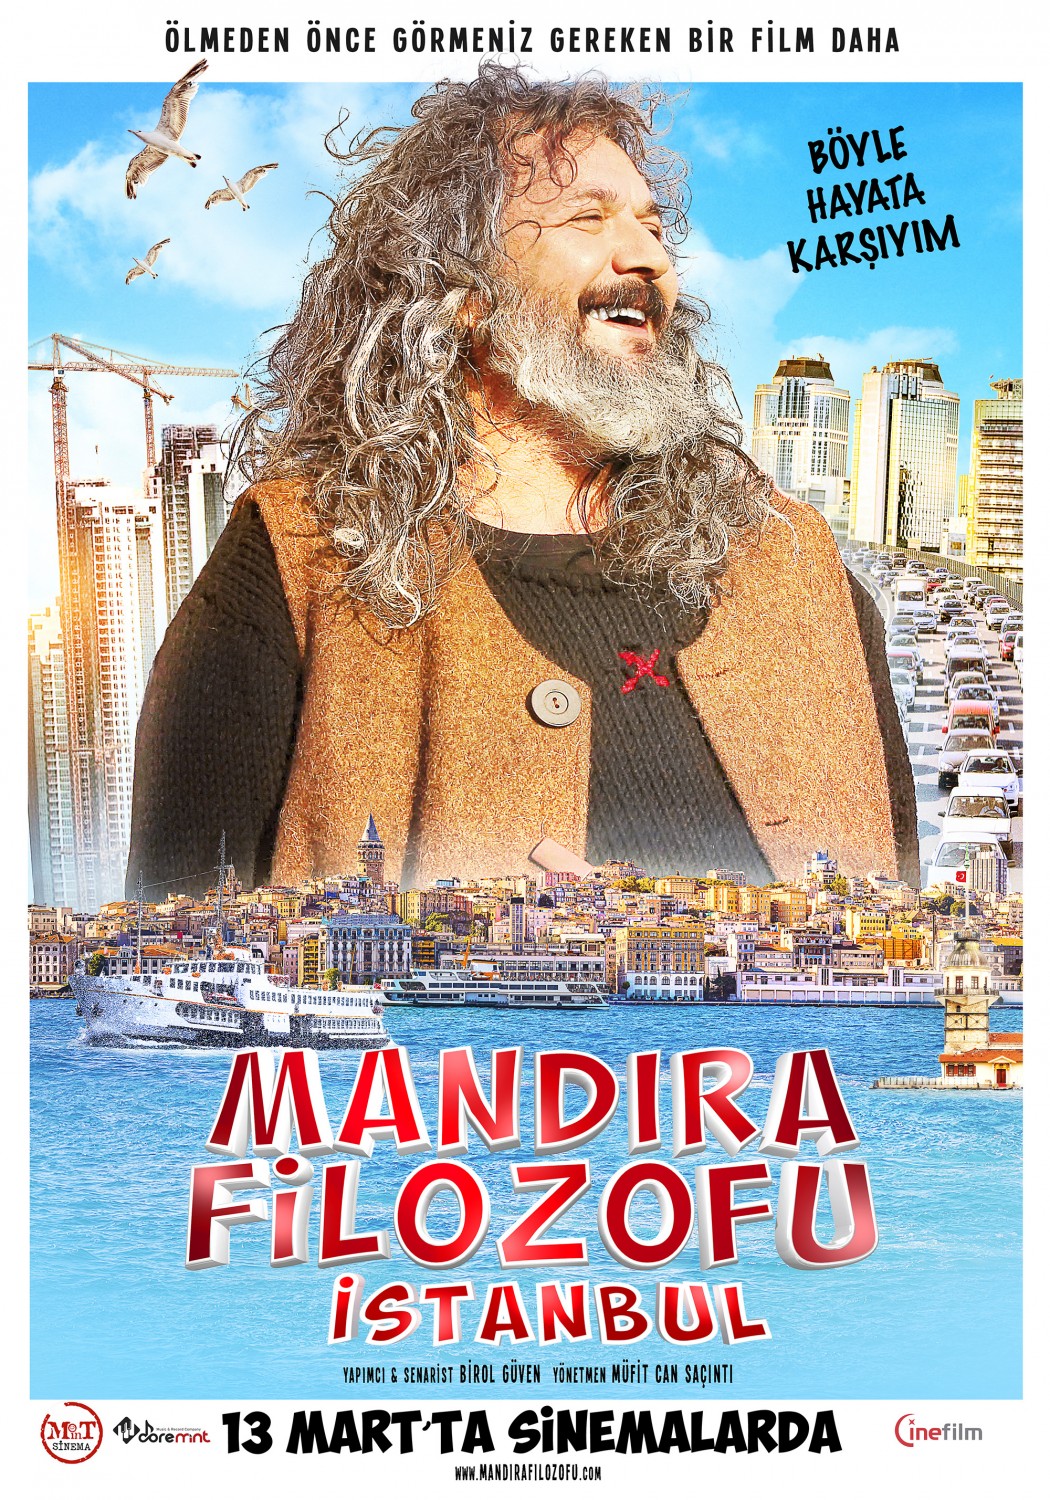 Extra Large Movie Poster Image for Mandira Filozofu (#2 of 3)